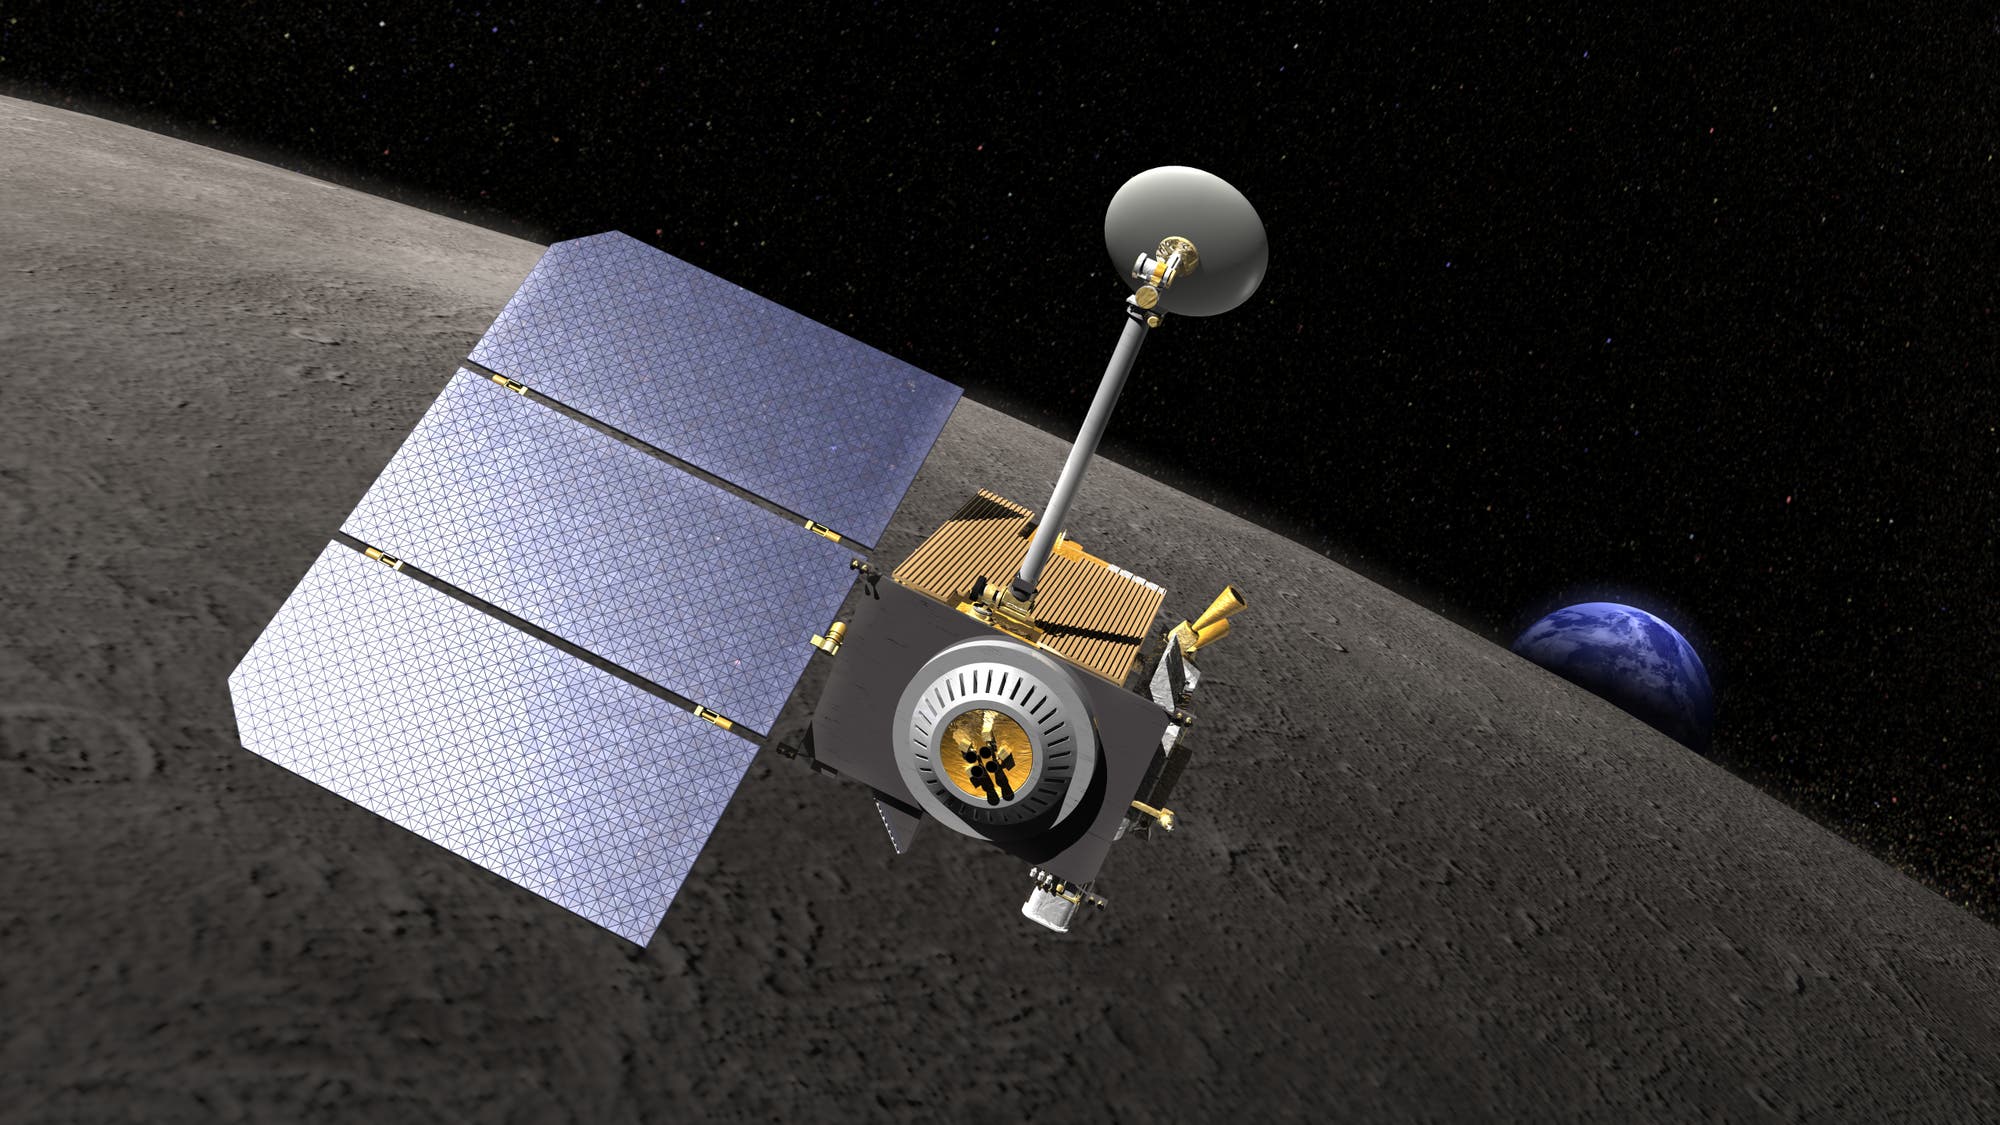 Lunar Reconnaissance Orbiter (LRO)